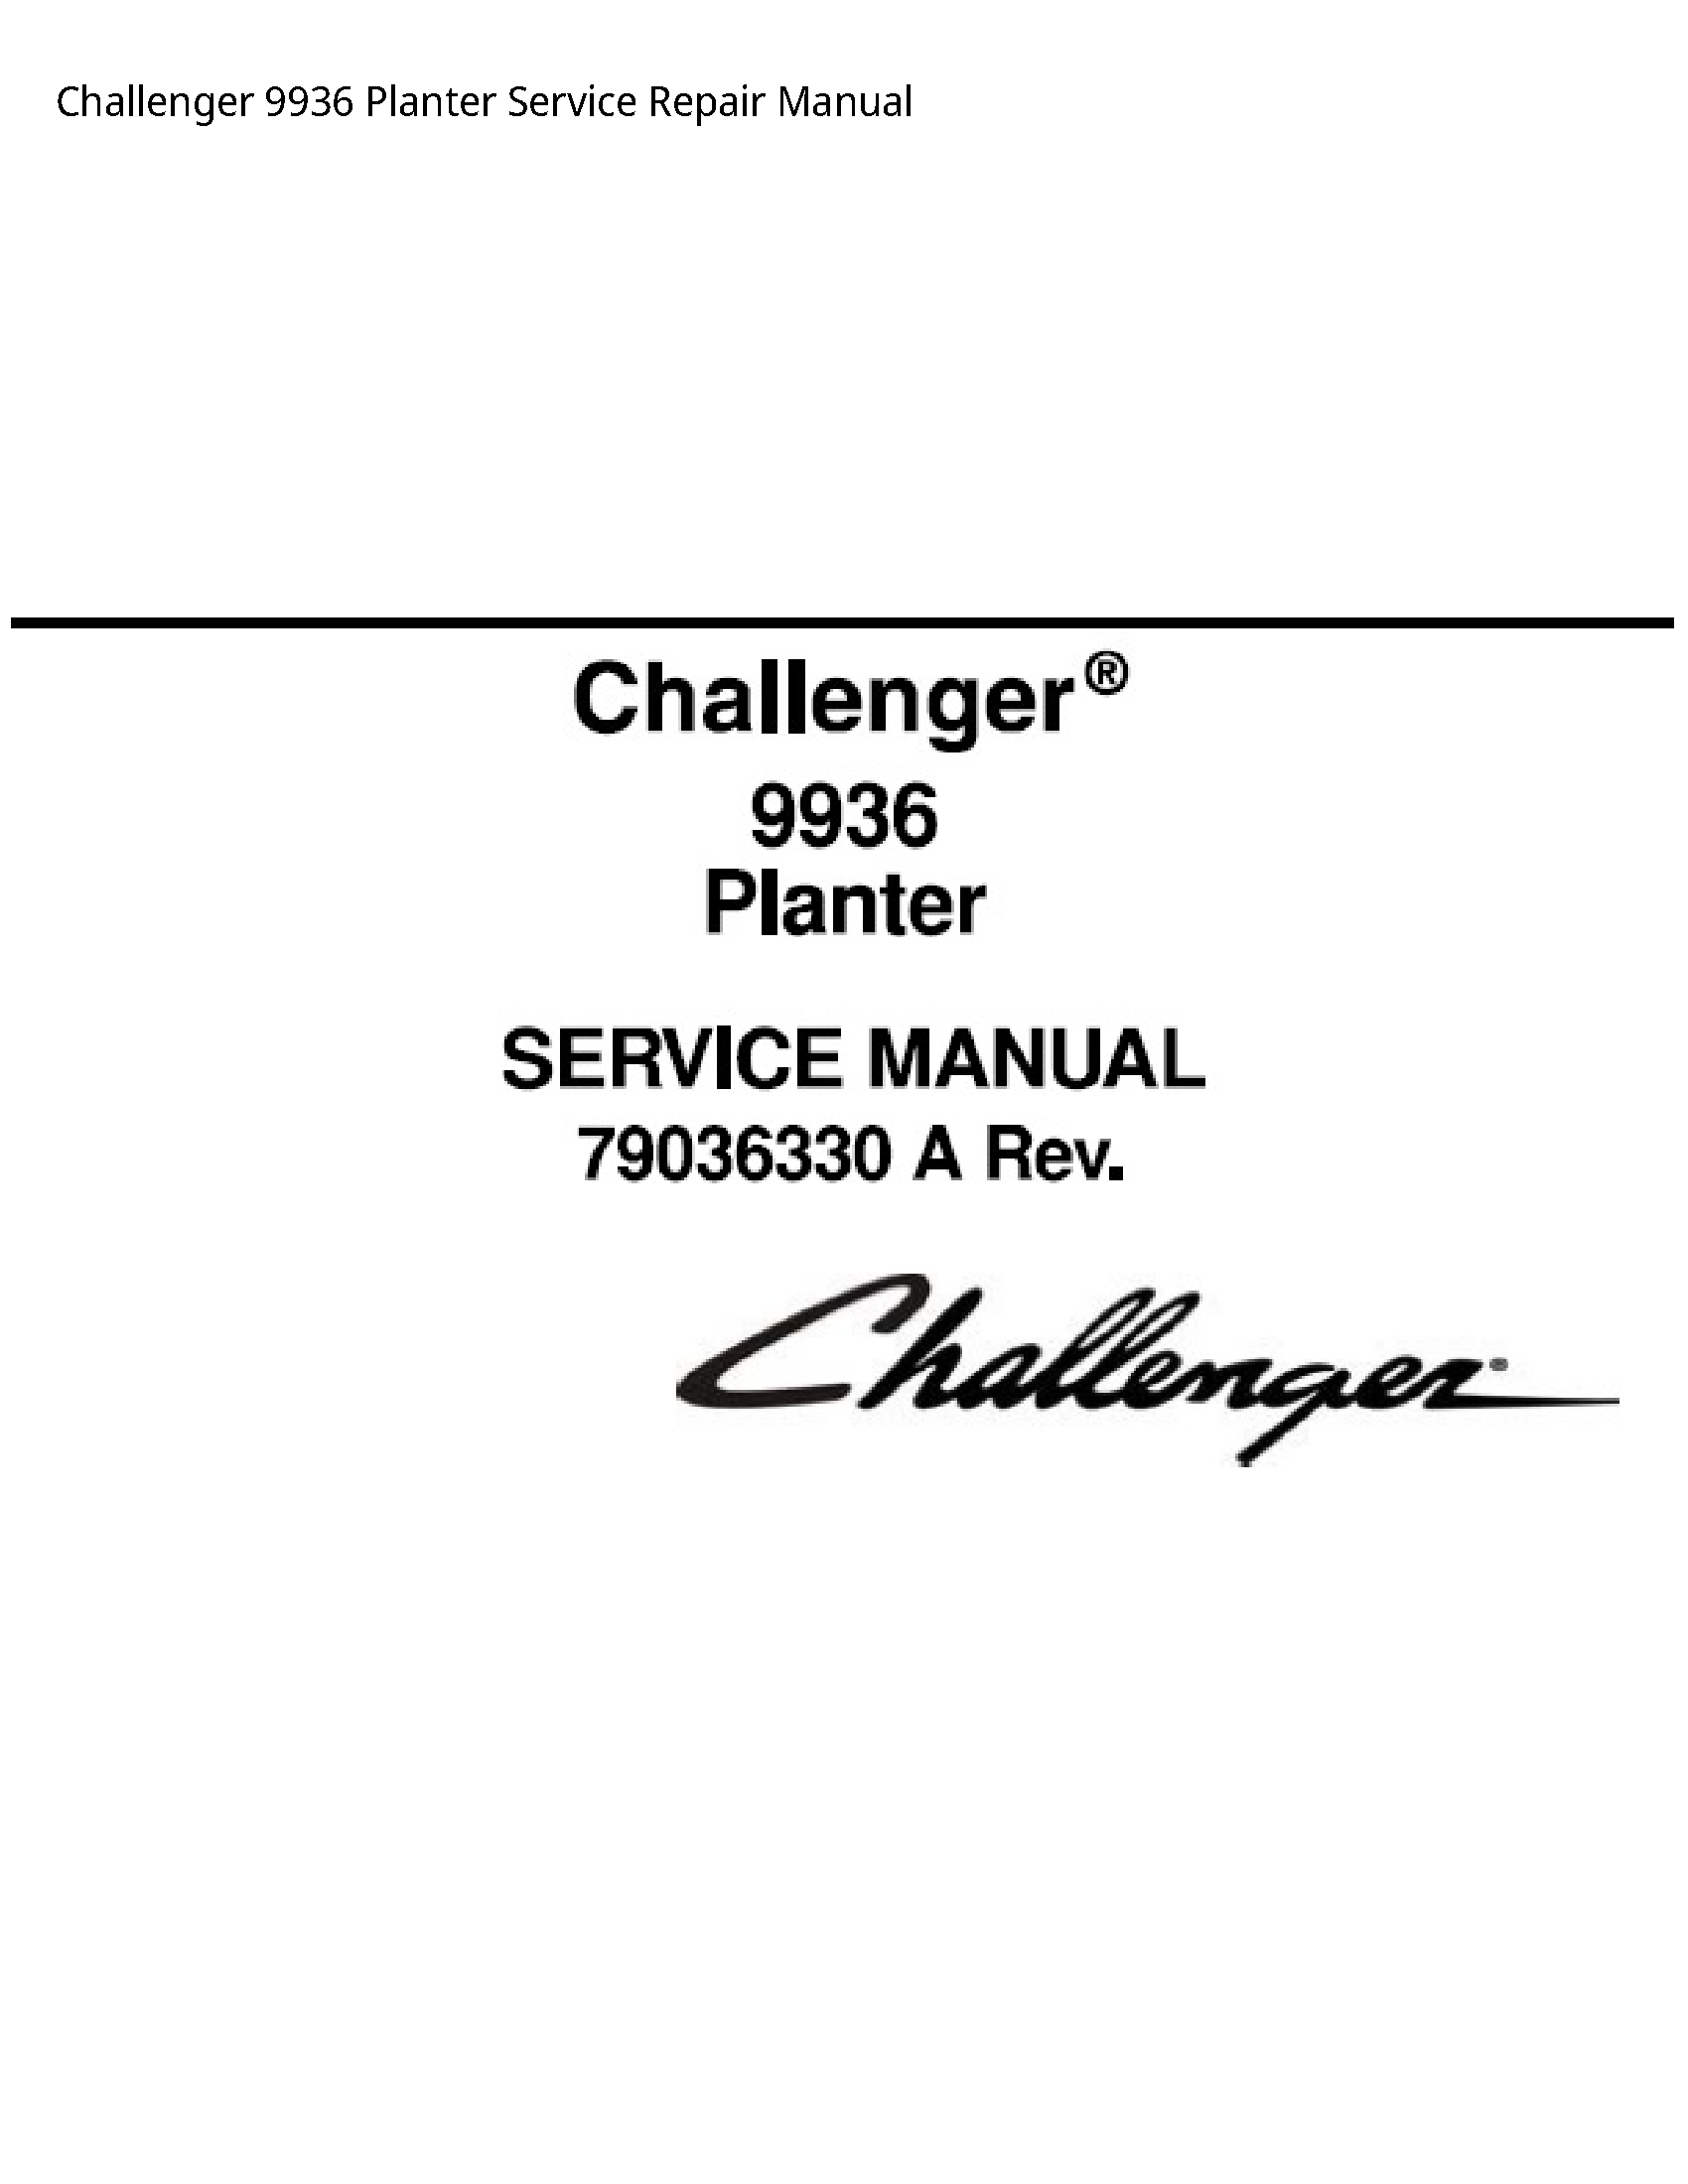 Challenger 9936 Planter manual